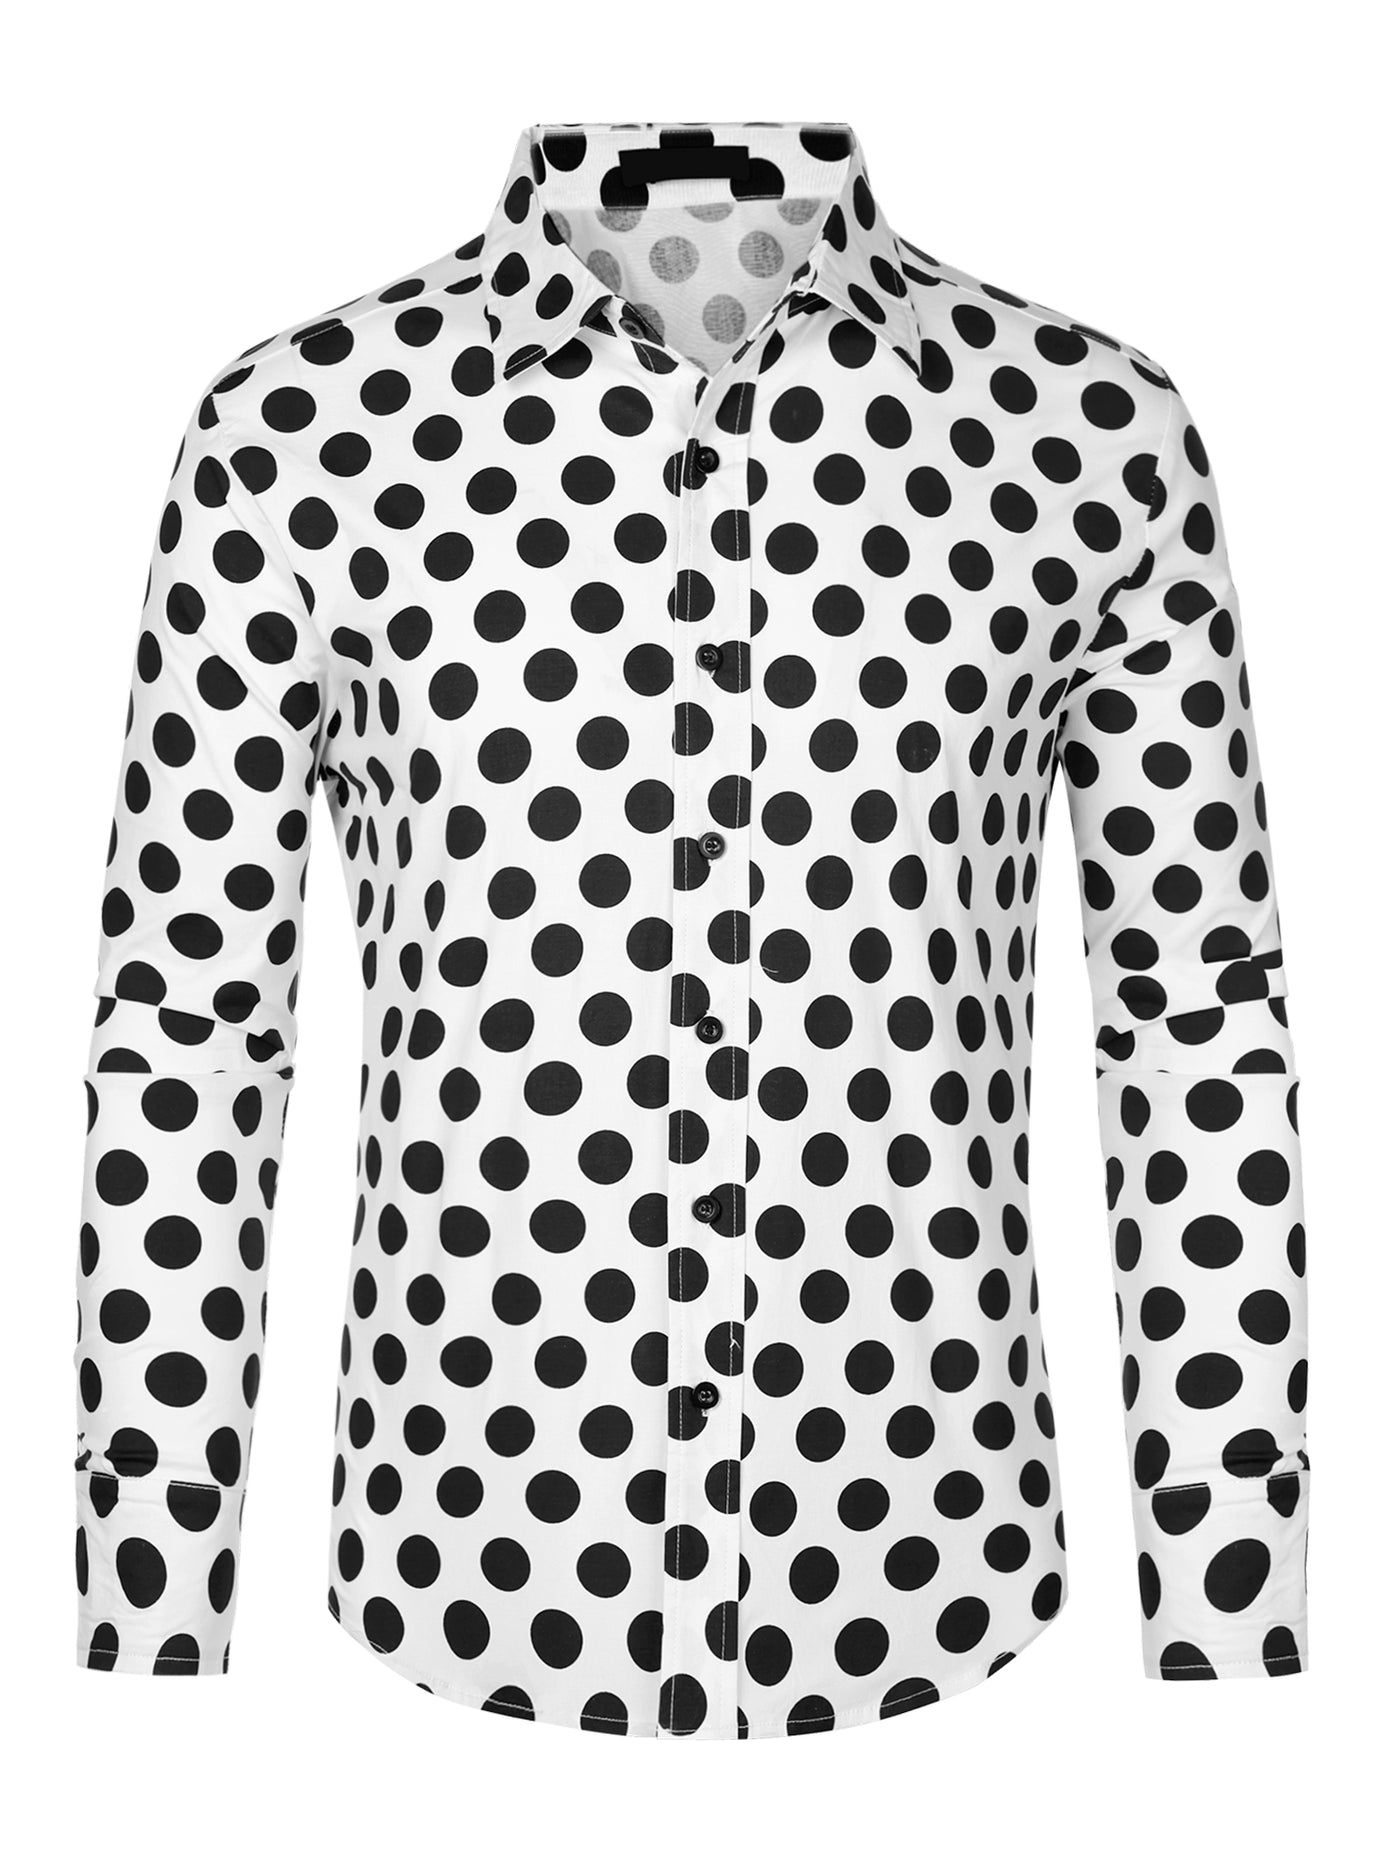 Bublédon Polka Dots Formal Shirts for Men's Point Collar Long Sleeves Dress Shirt